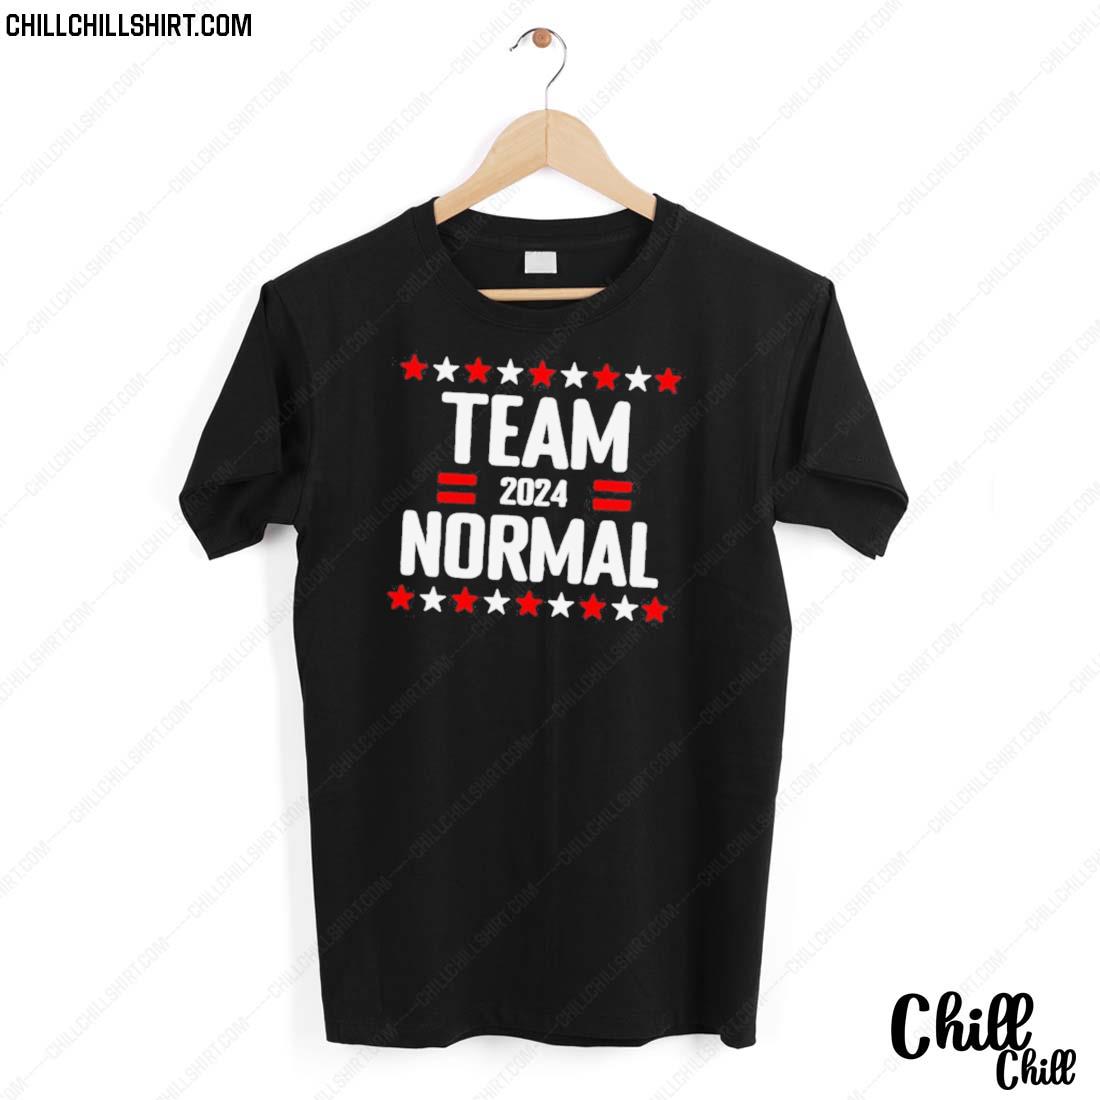 Nice team Normal 2024 T-shirt